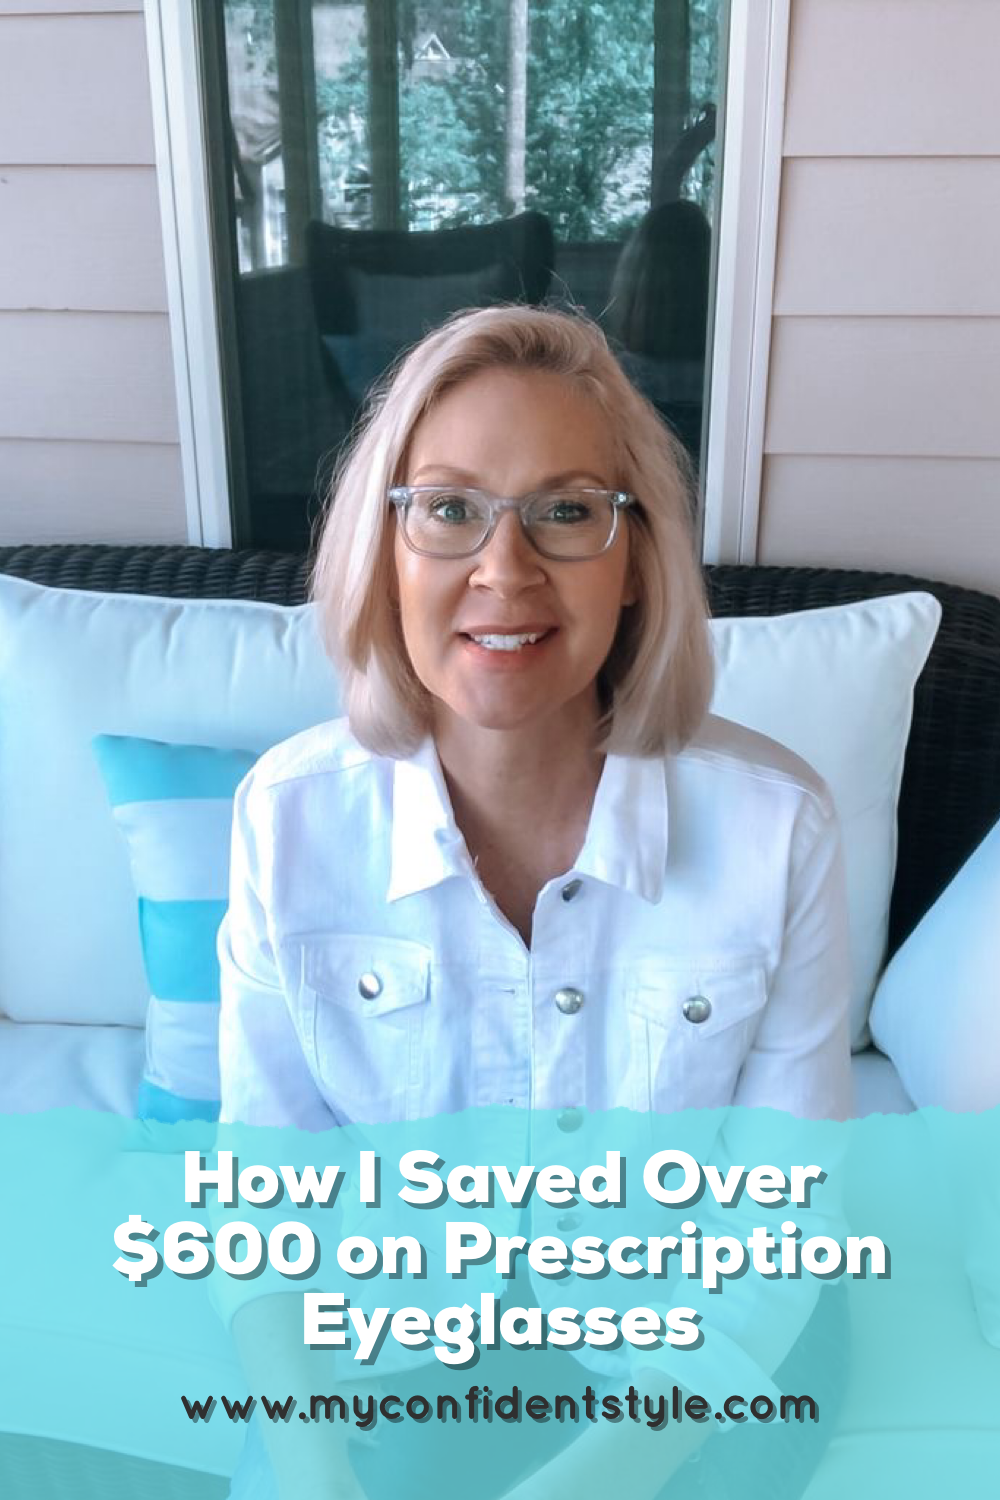 How I saved $600 on prescription eyeglasses